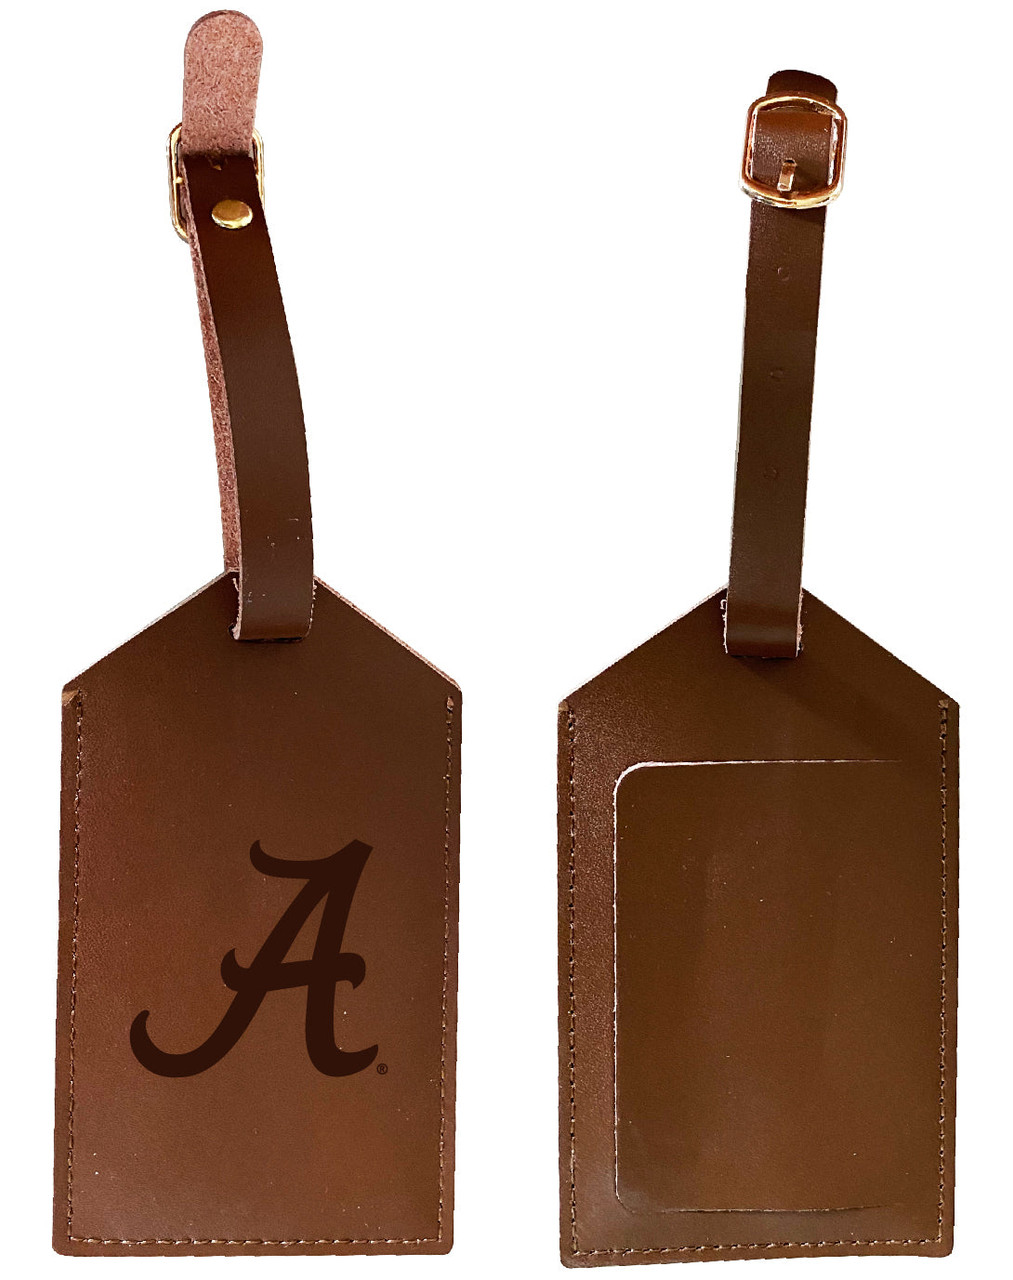 Alabama Crimson Tide Leather Luggage Tag Engraved